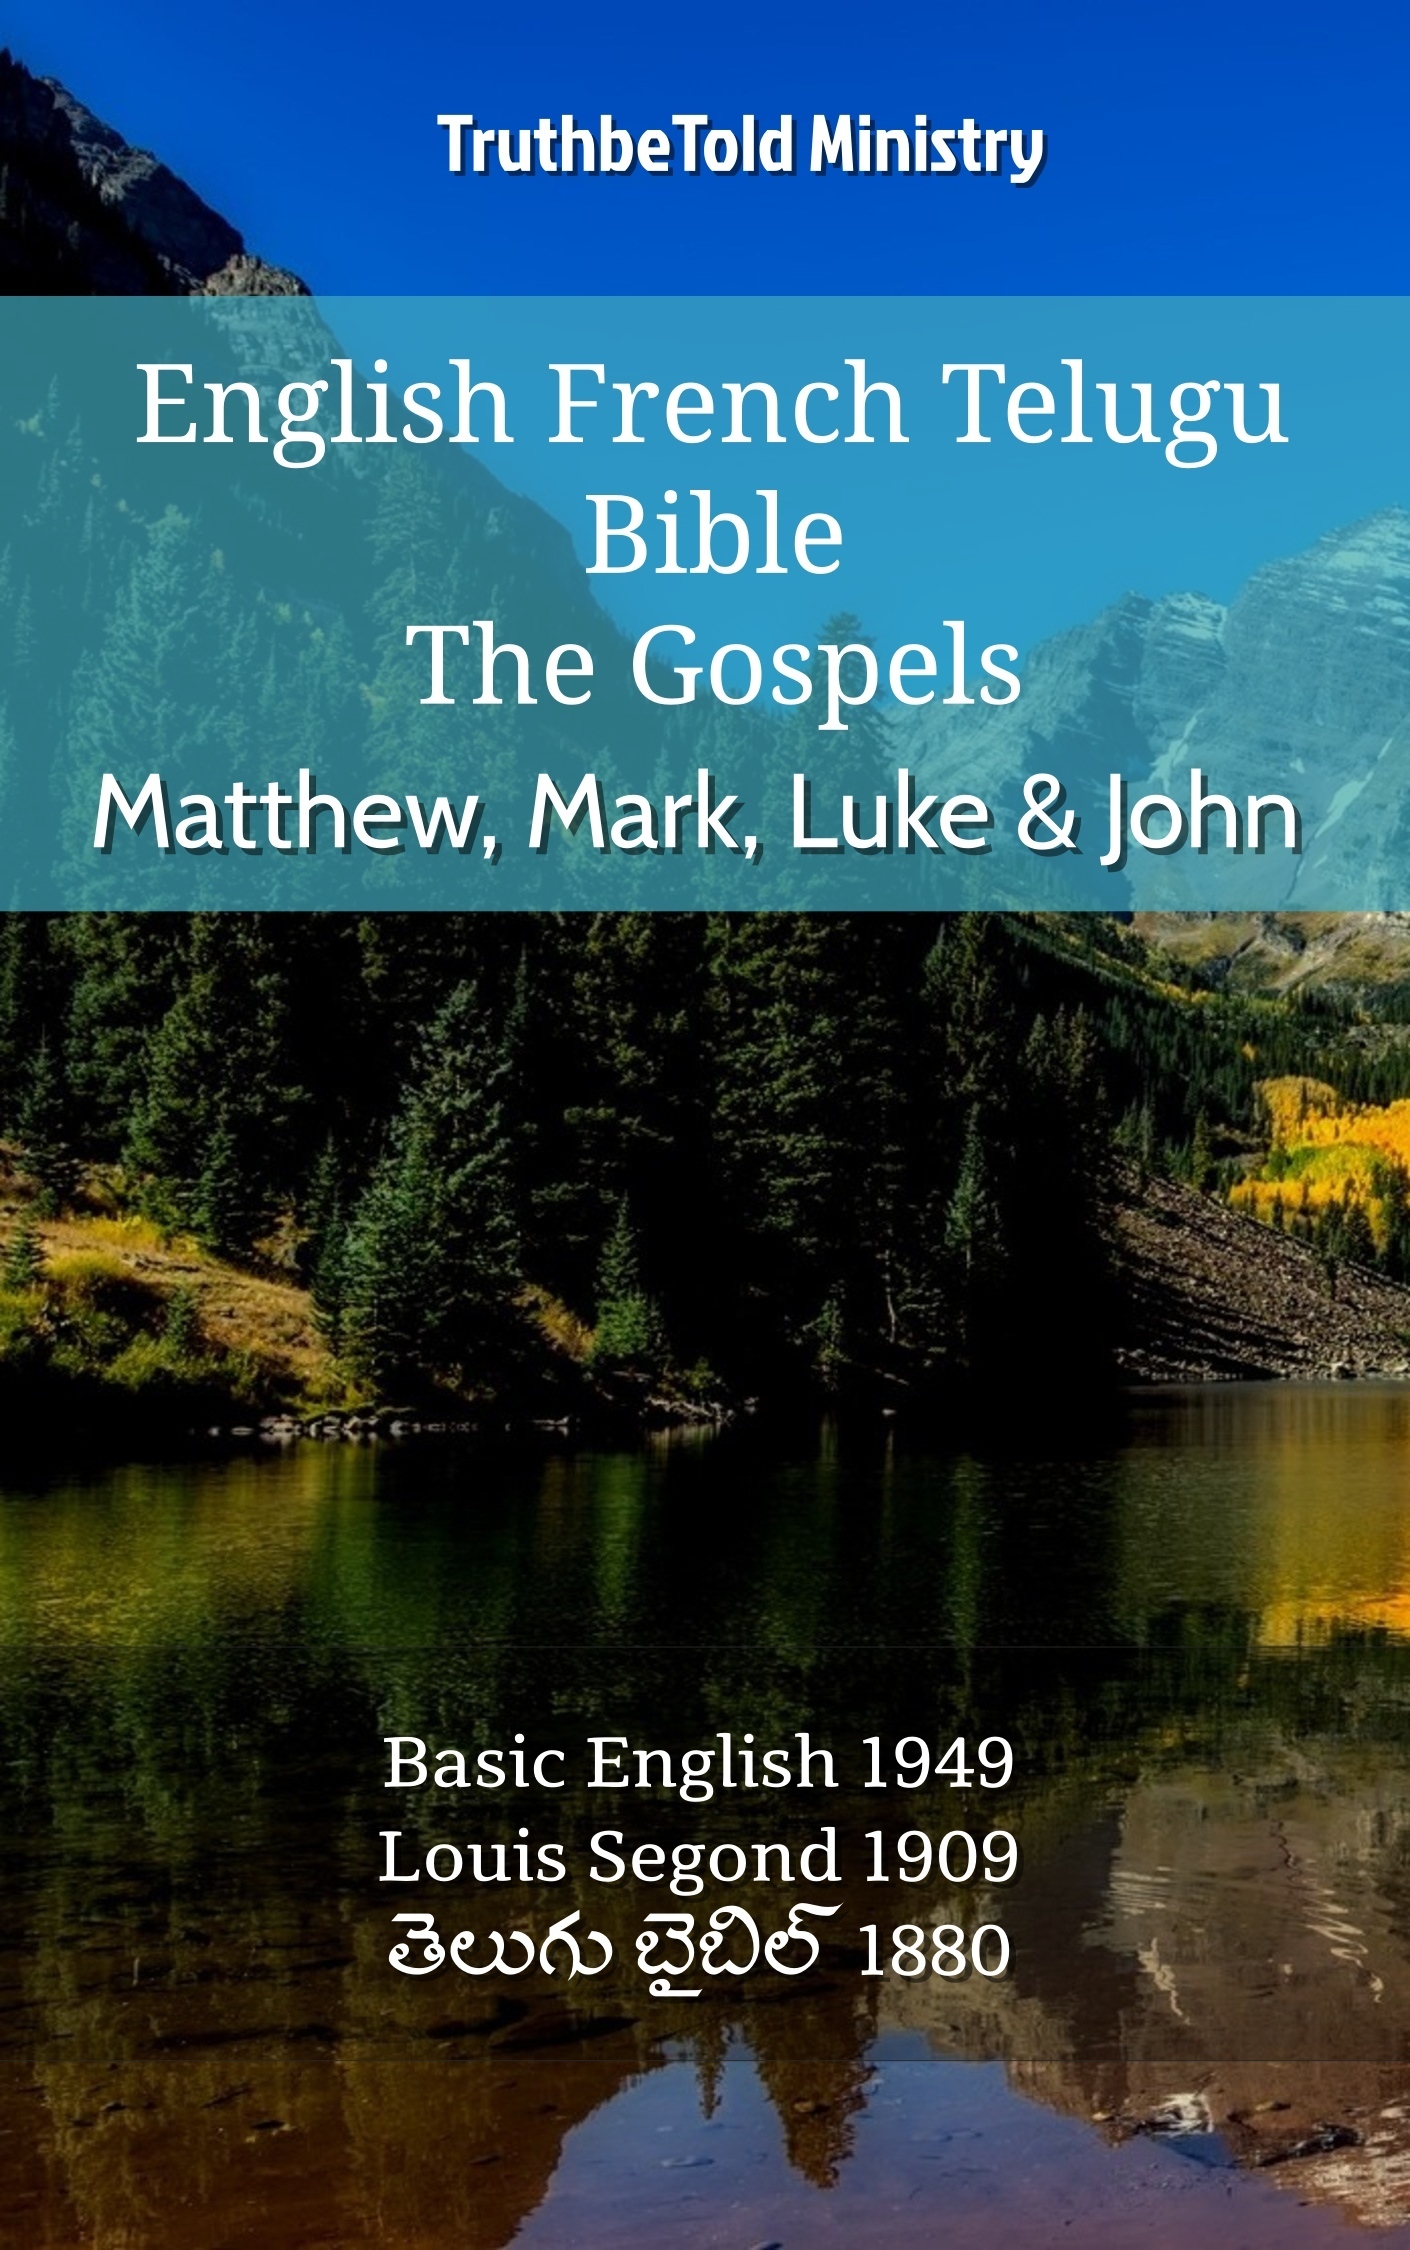 English French Telugu Bible - The Gospels - Matthew, Mark, Luke & John